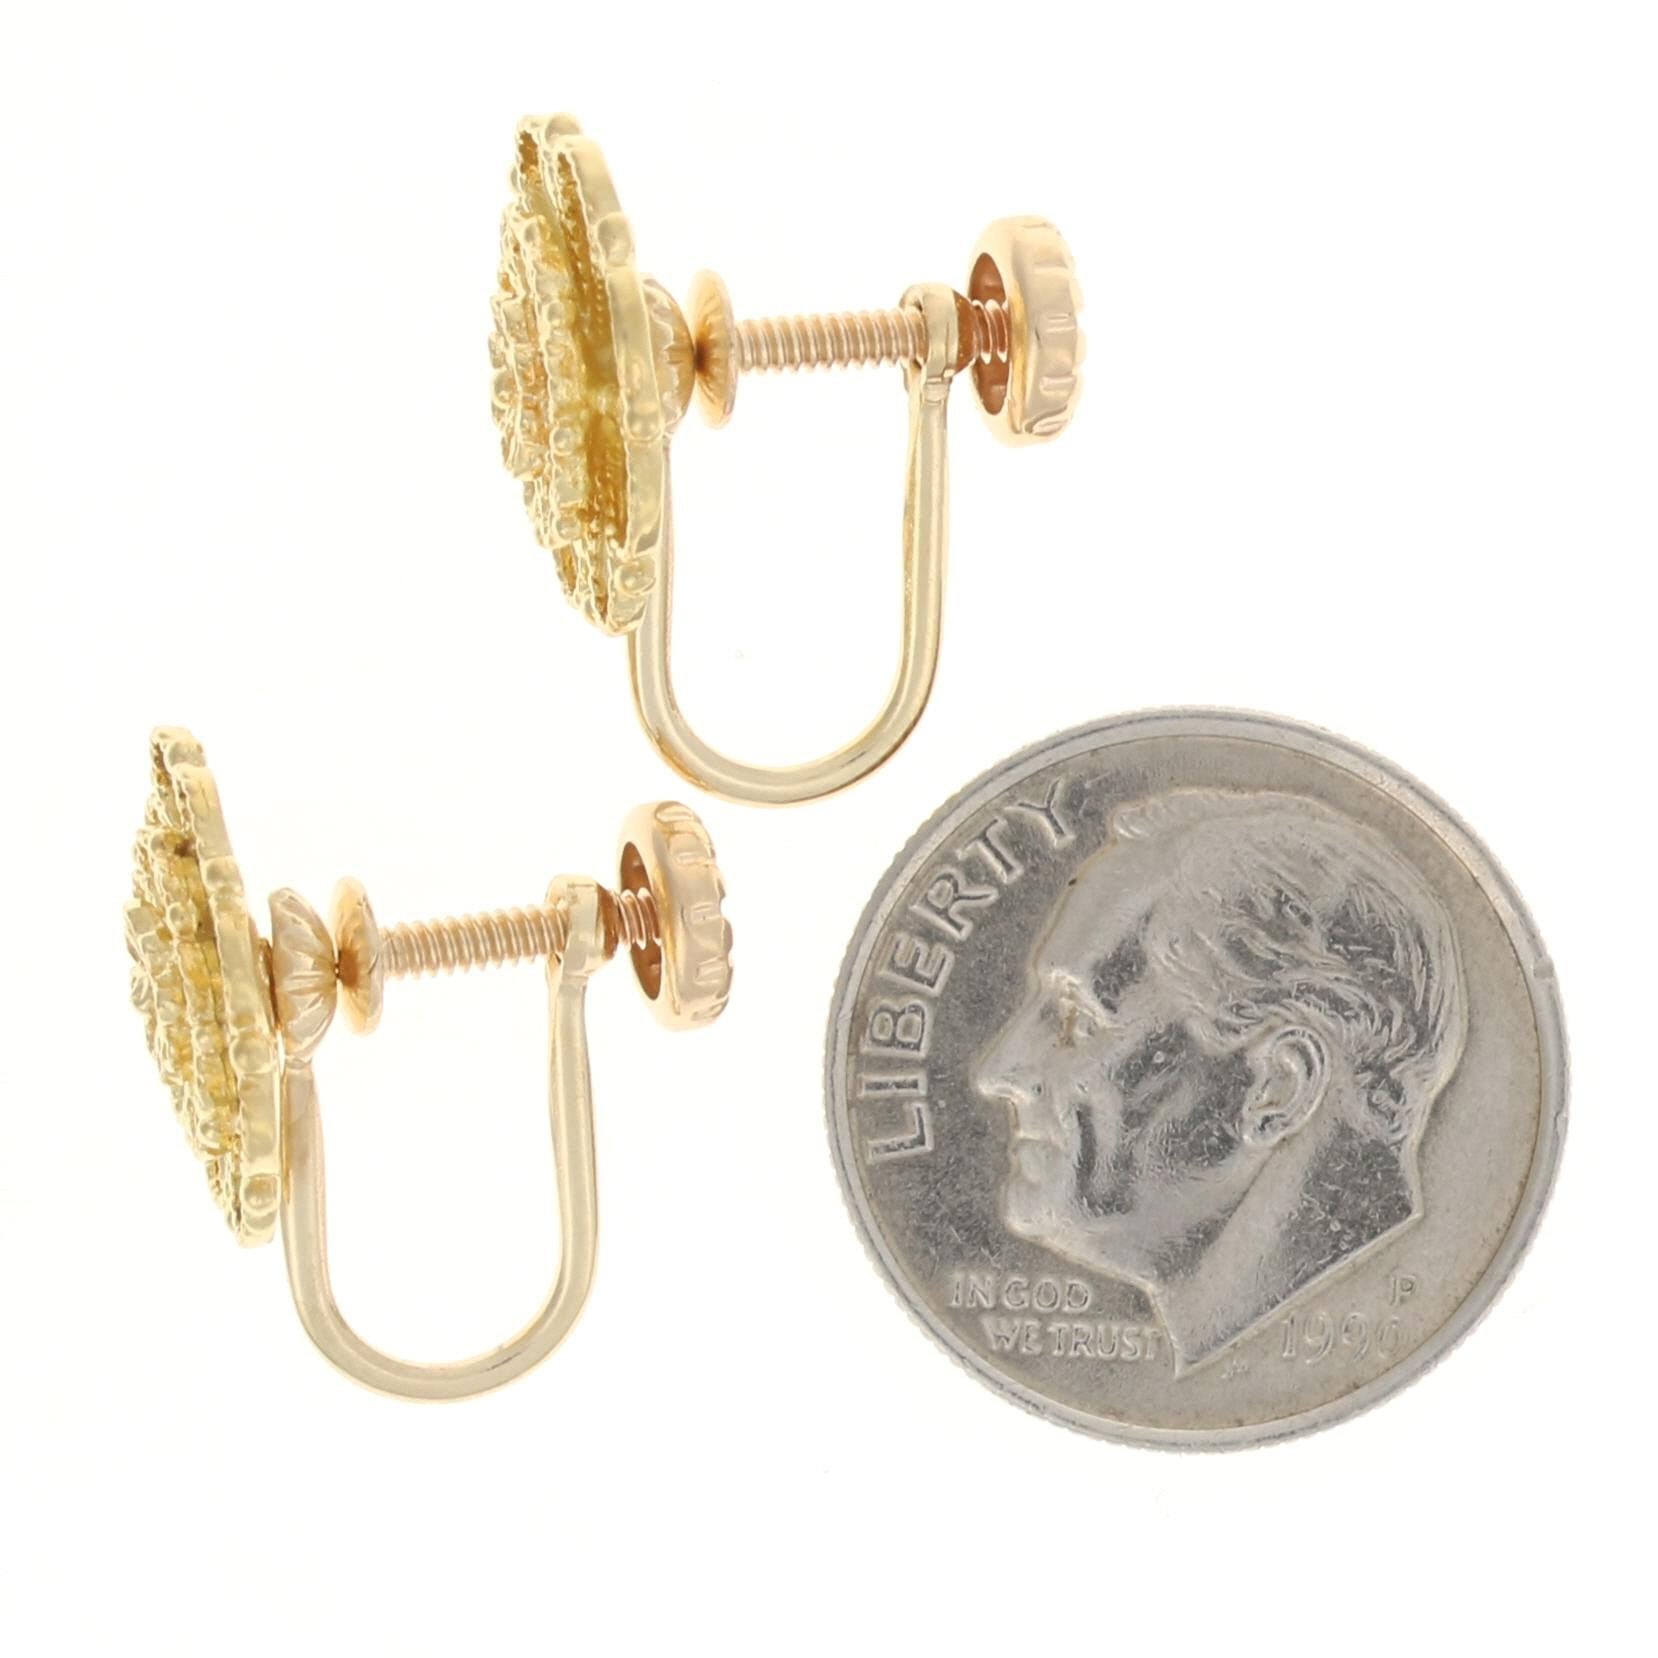 14k gold flower stud earrings